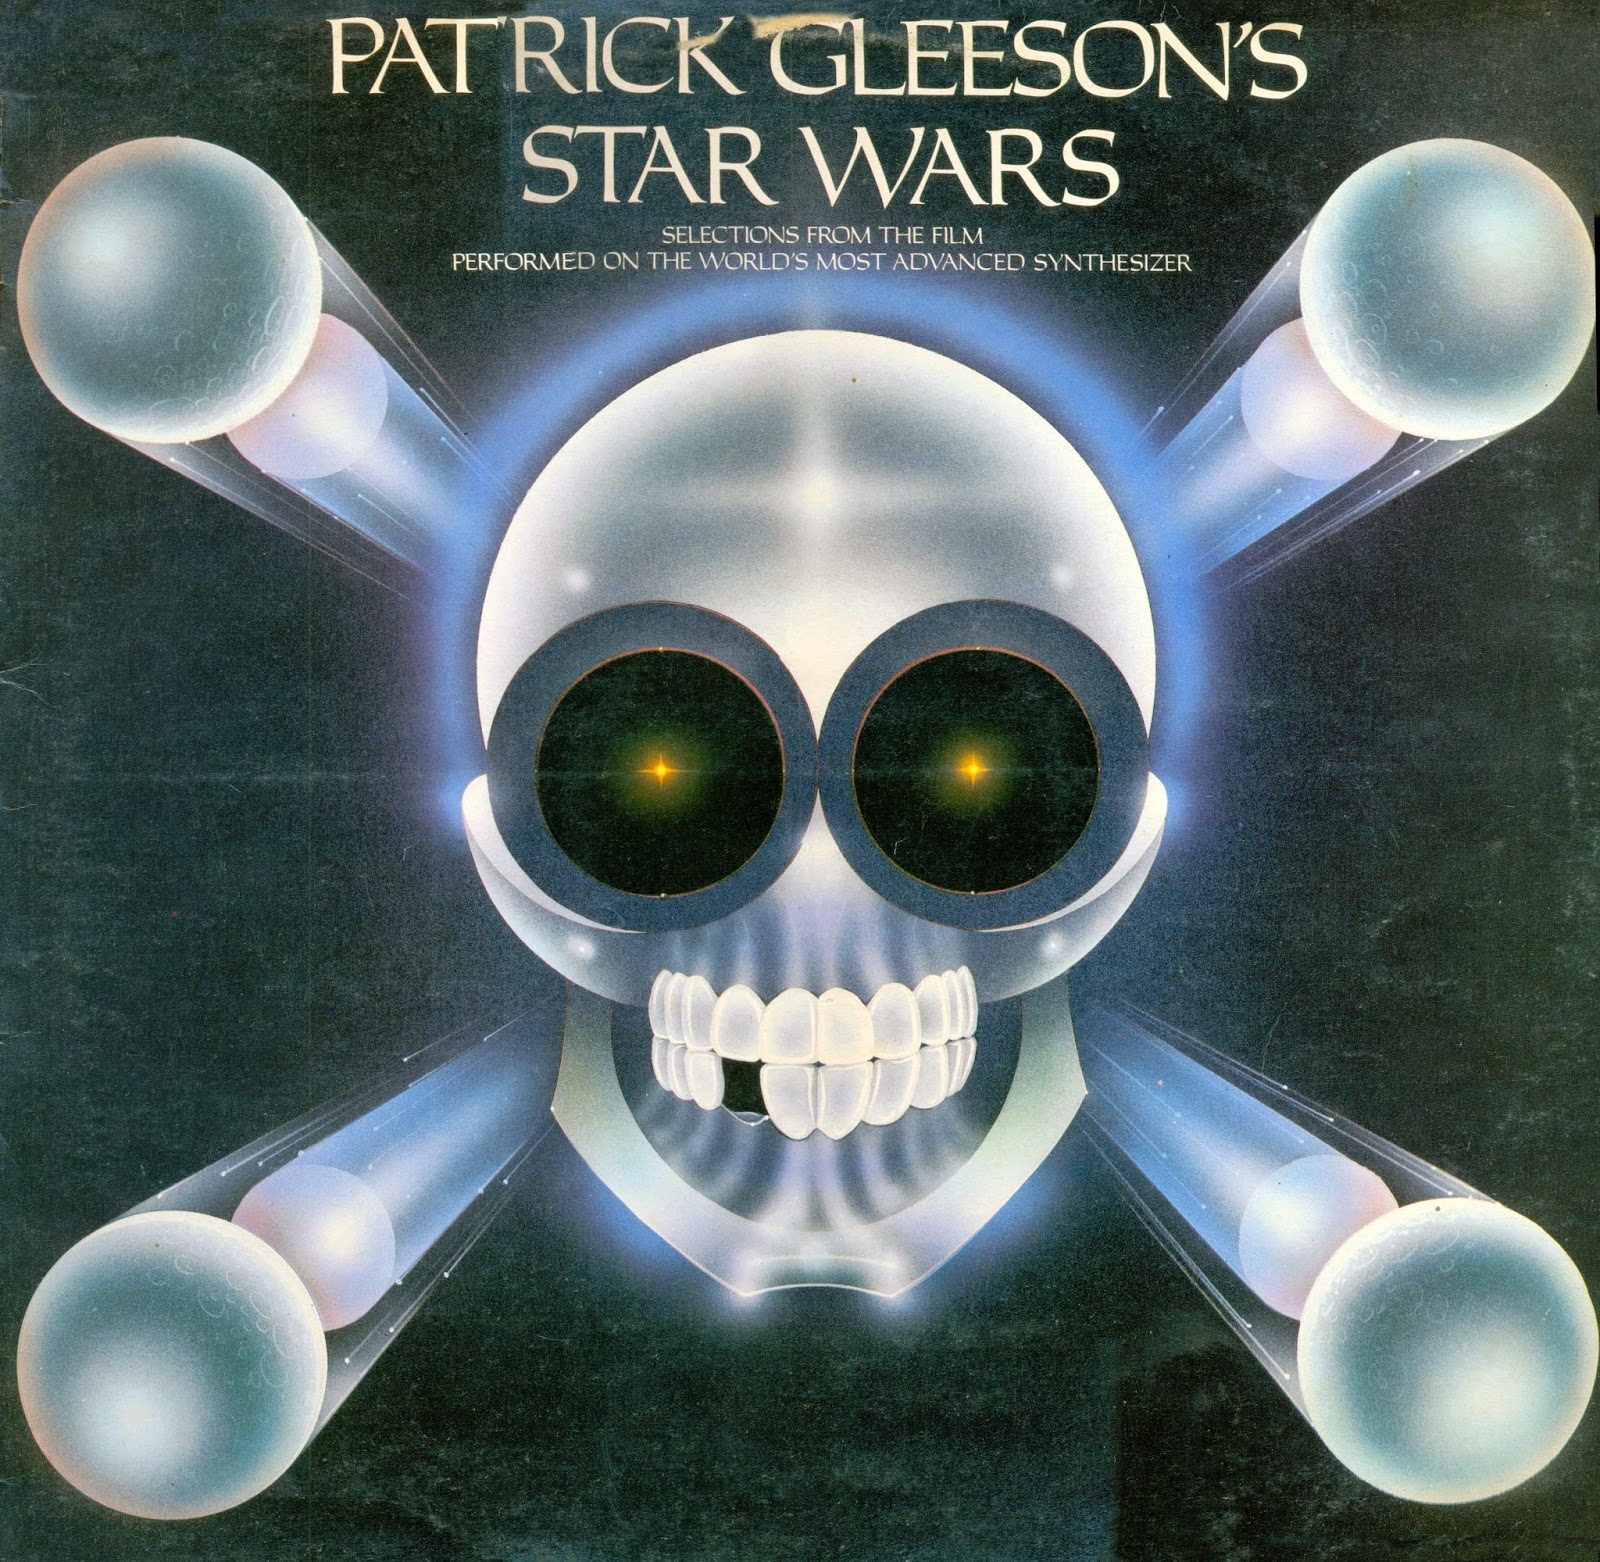 Patrick Gleeson "Patrick Gleeson's Star Wars" (1977)